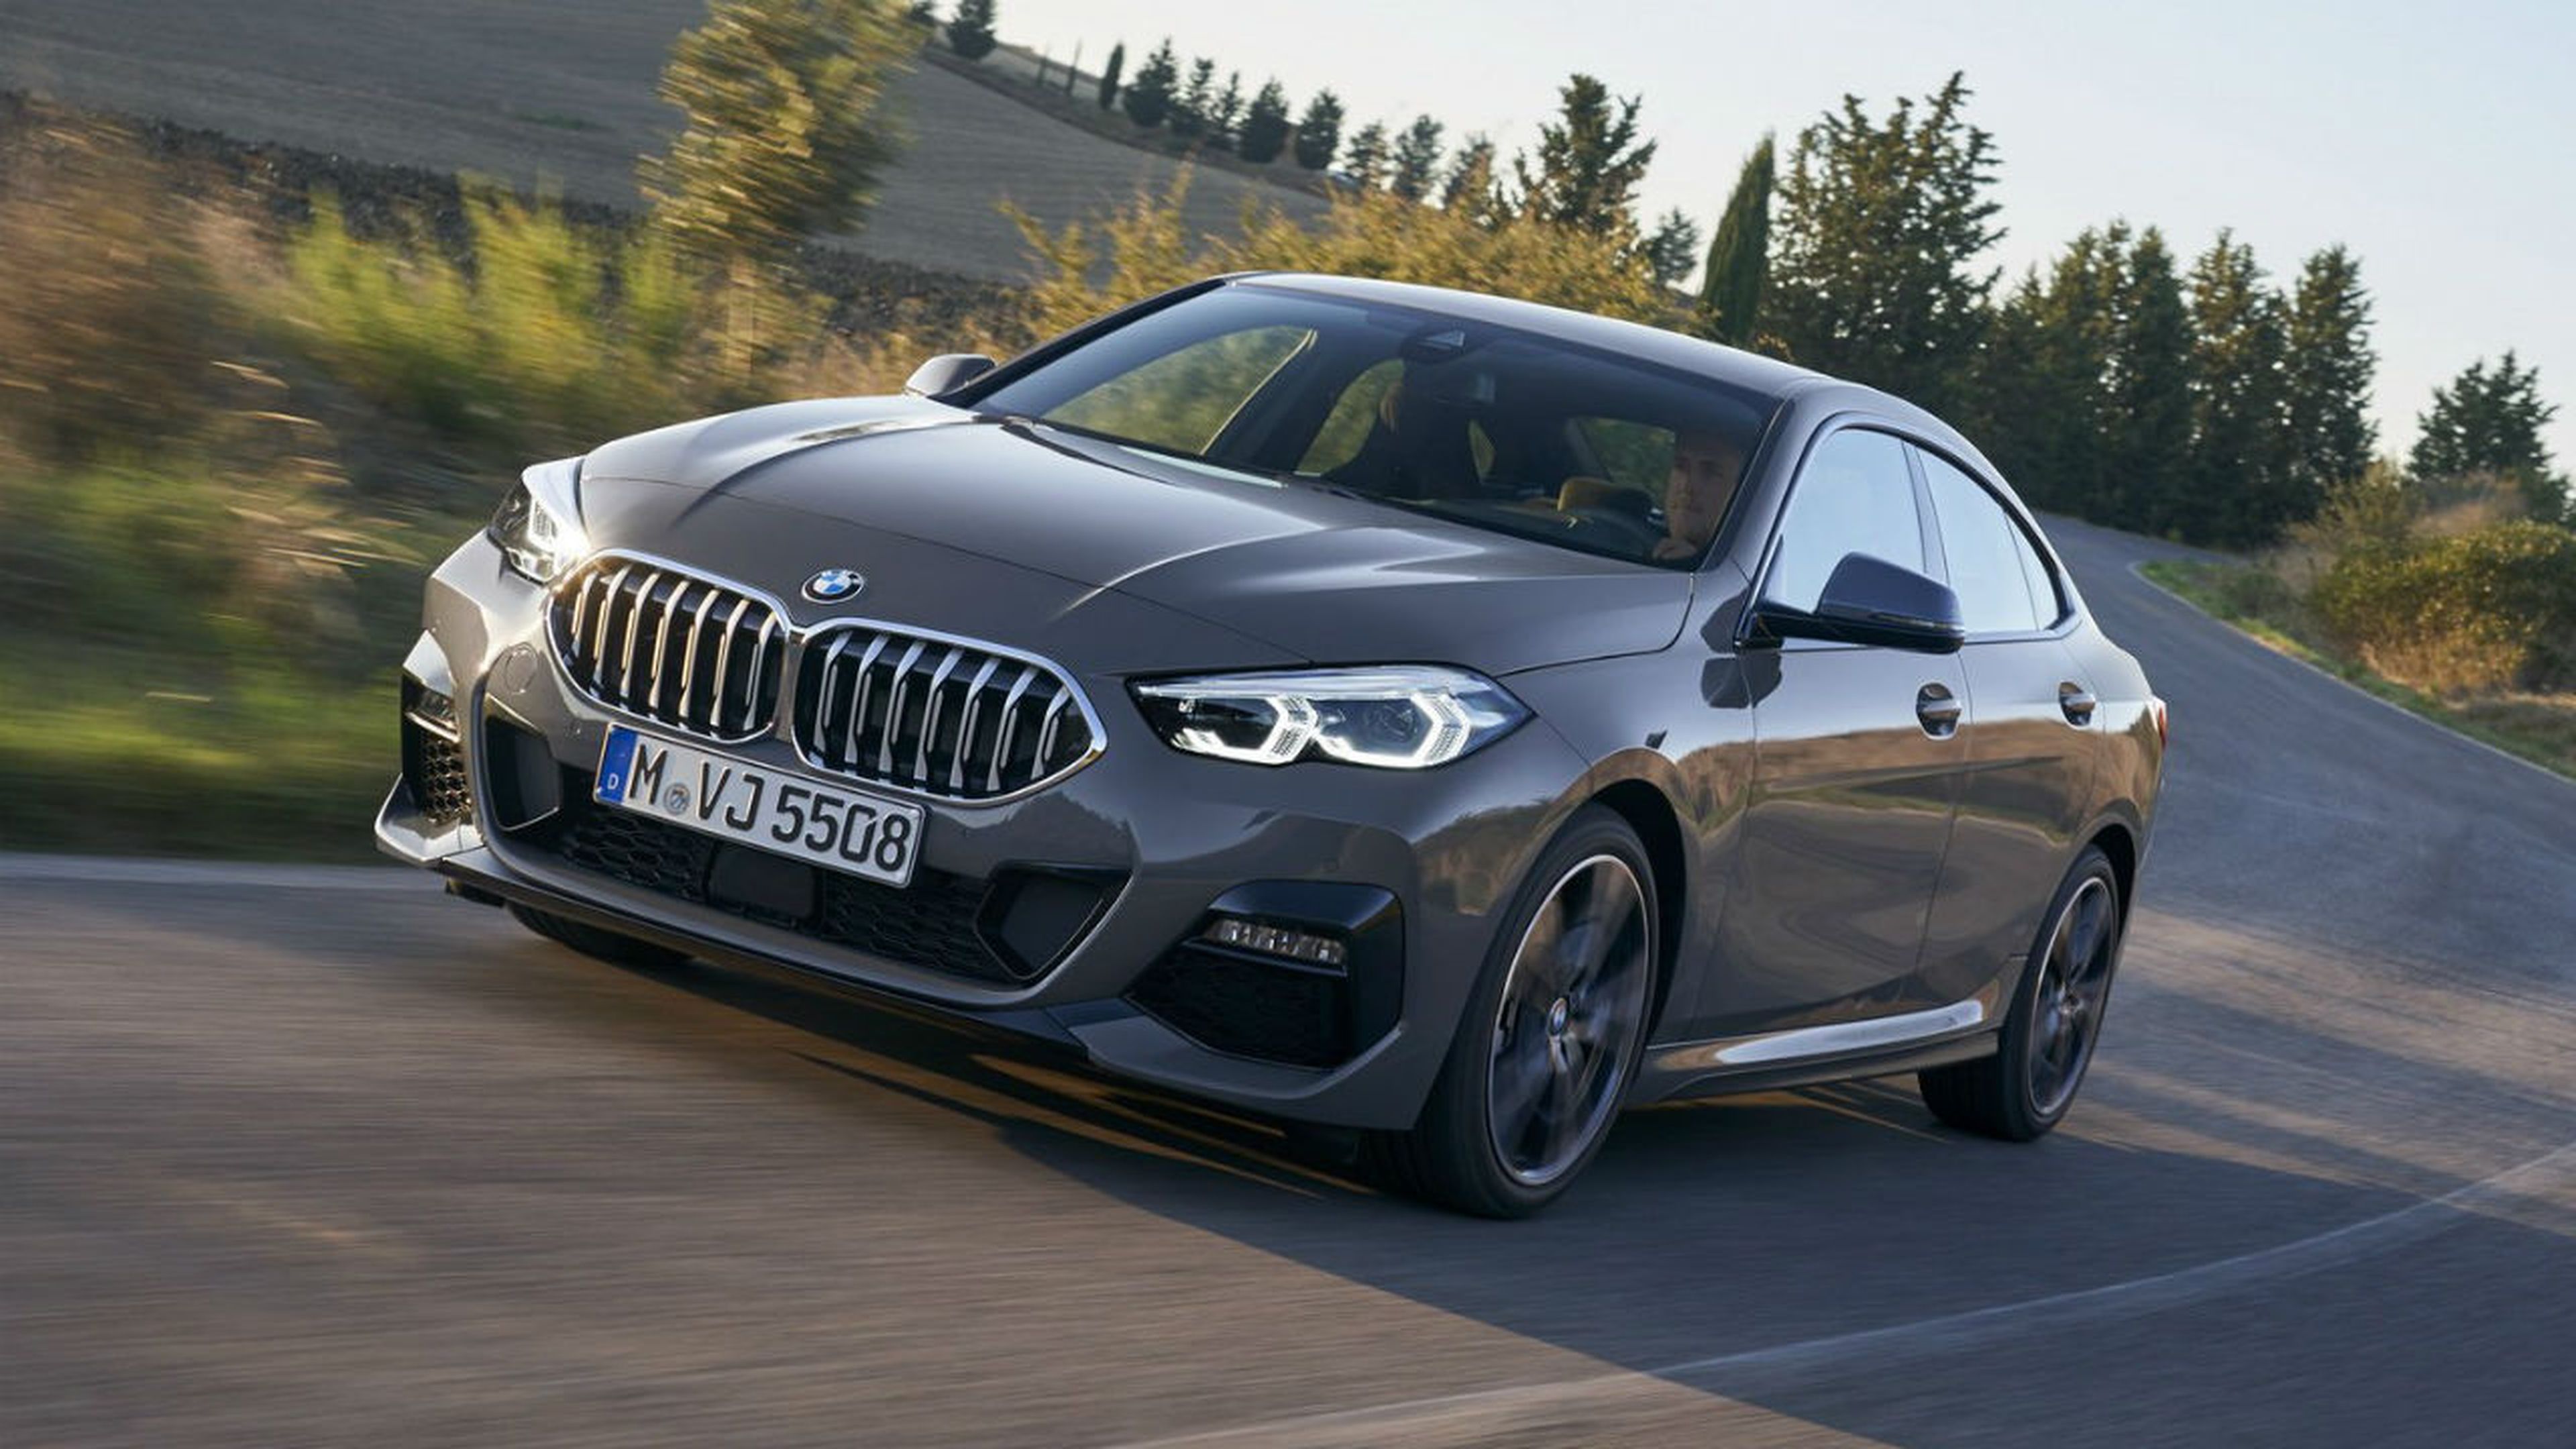 BMW Serie 2 Gran Coupé 2020